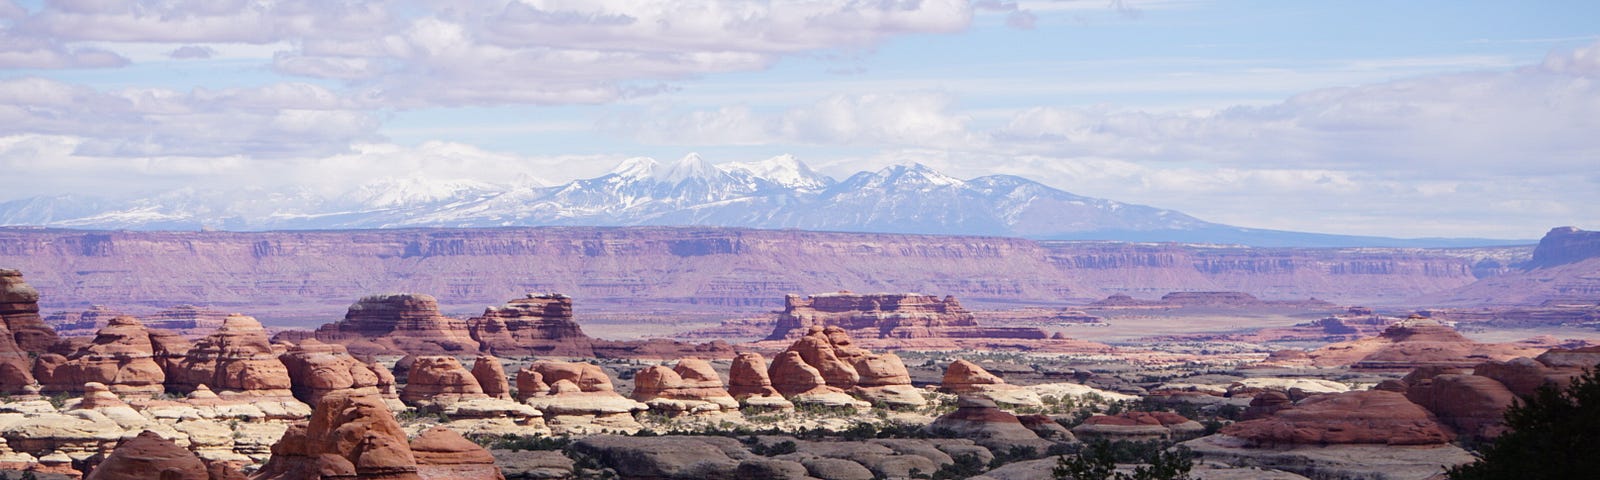 Desert mountain landscape view